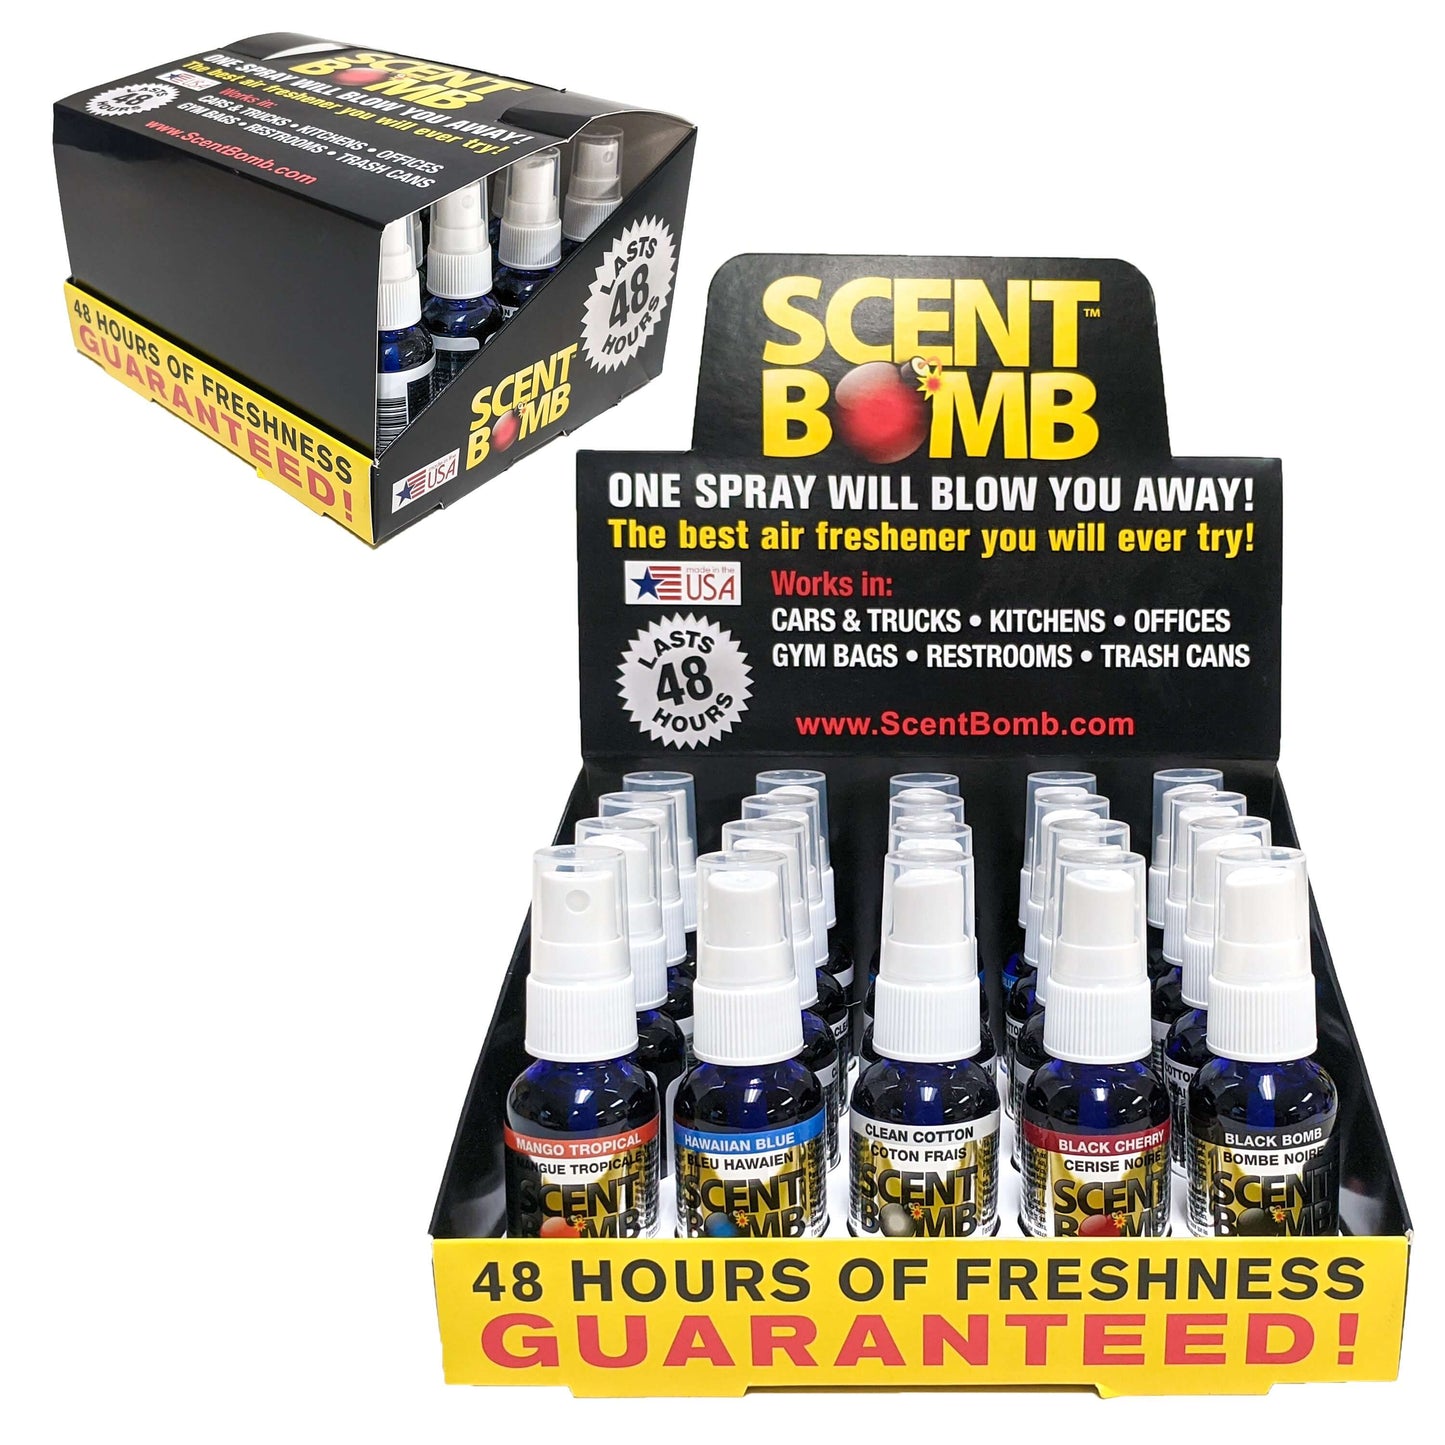 Scent Bomb Sprays, Display Box of 20 - Black Bomb Scent & More